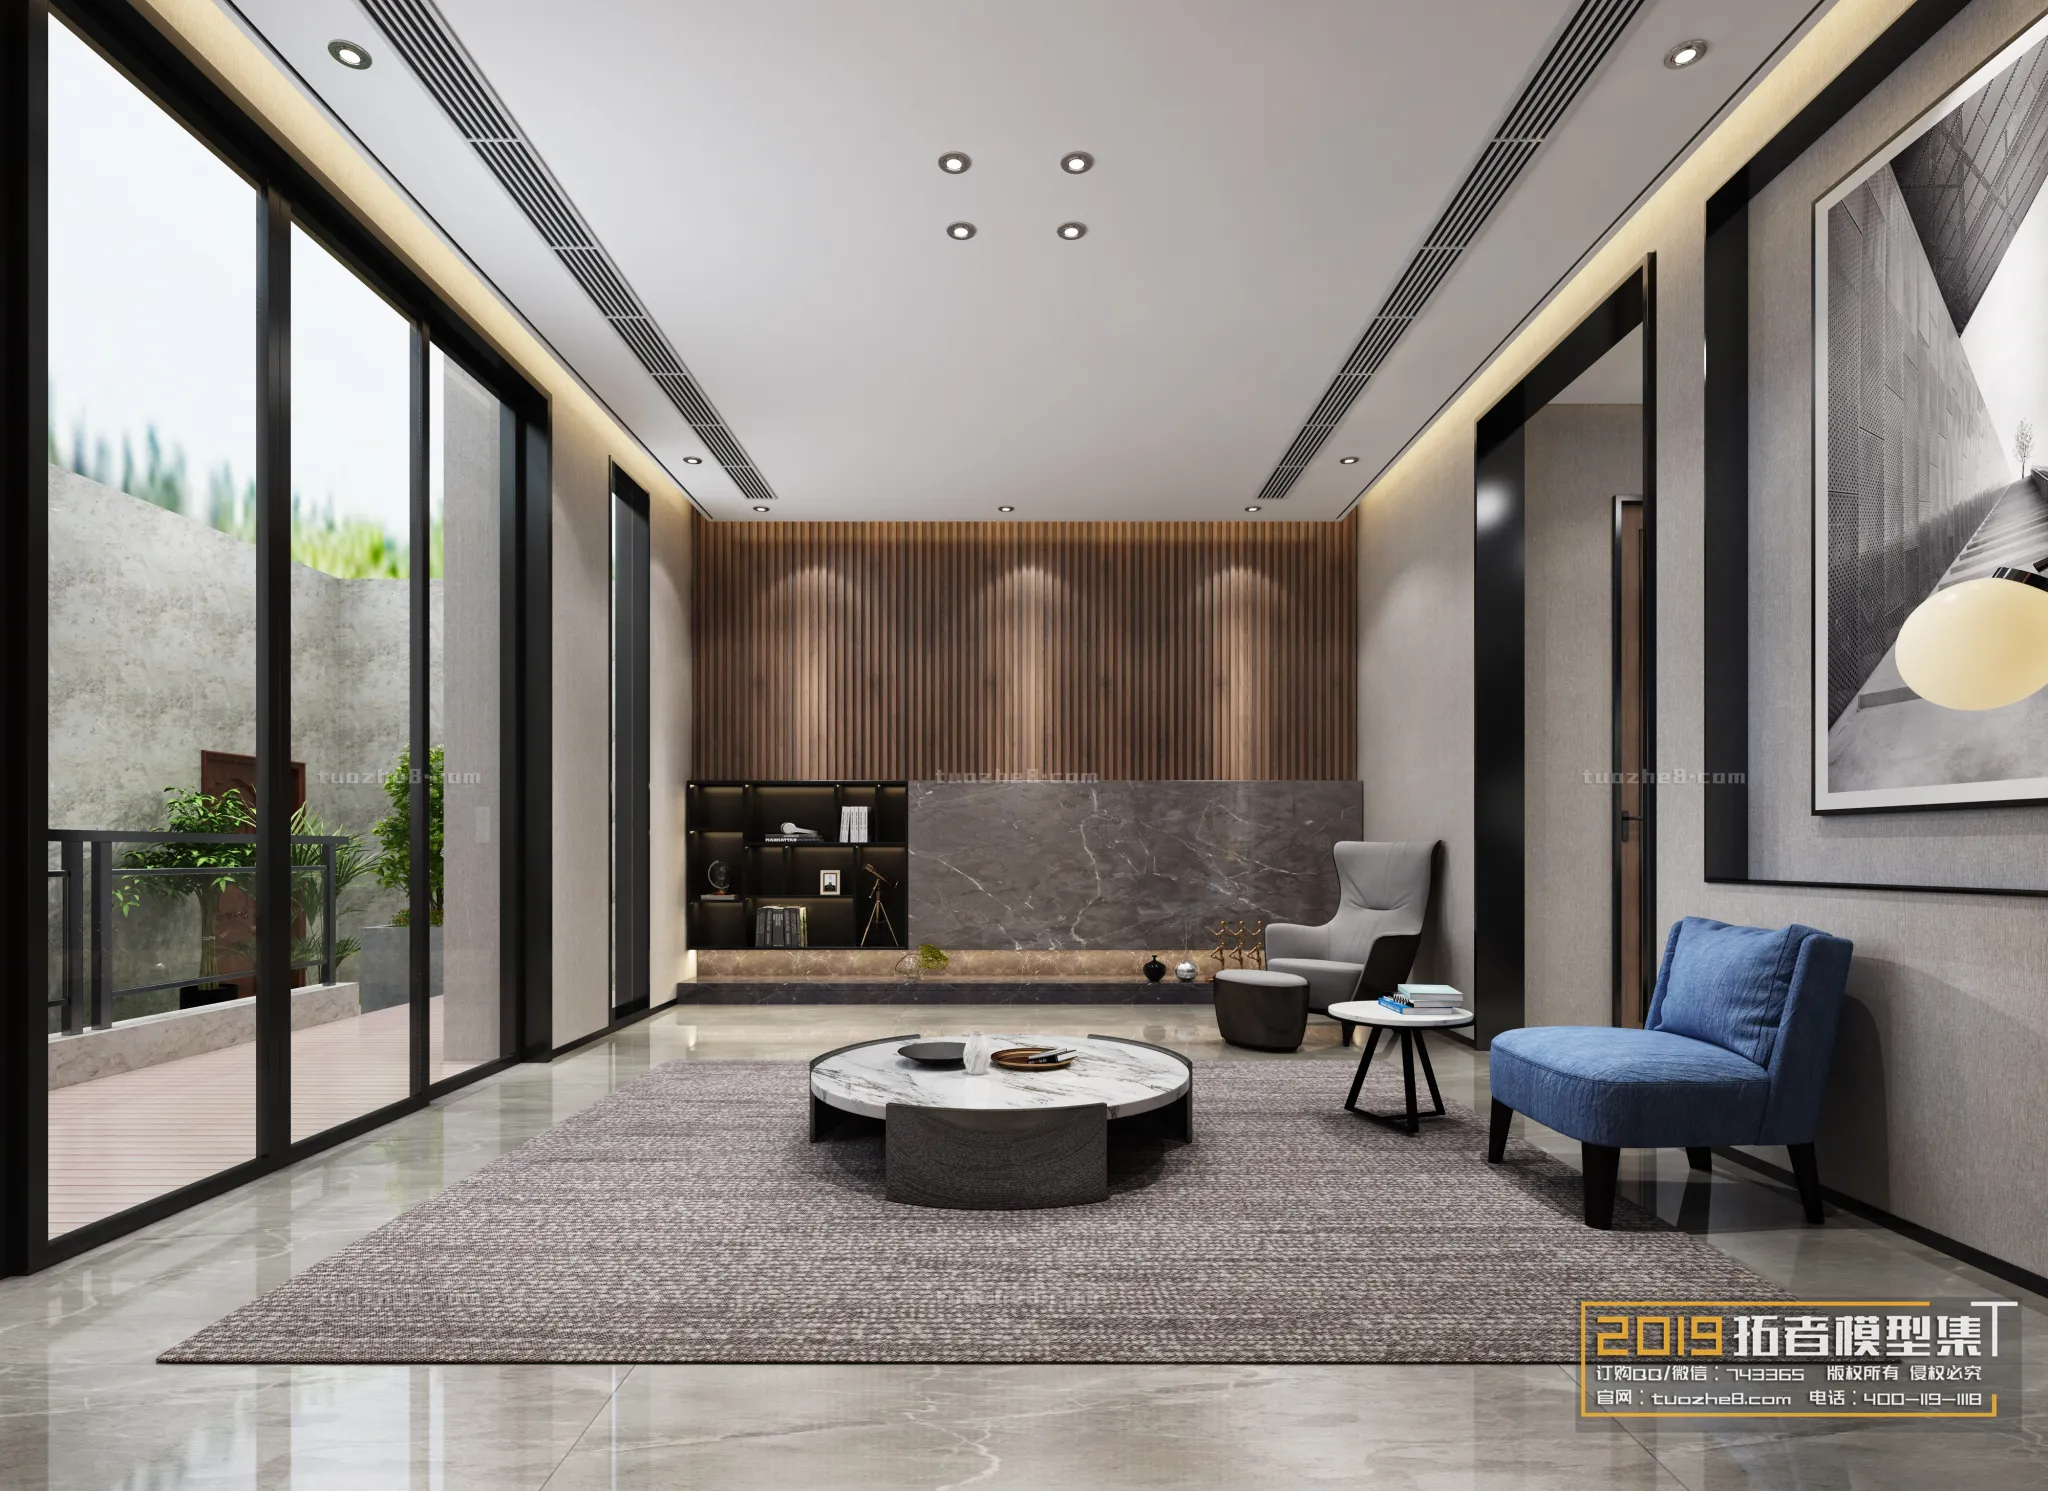 Extension Interior – MEETING & LEISURE – 048